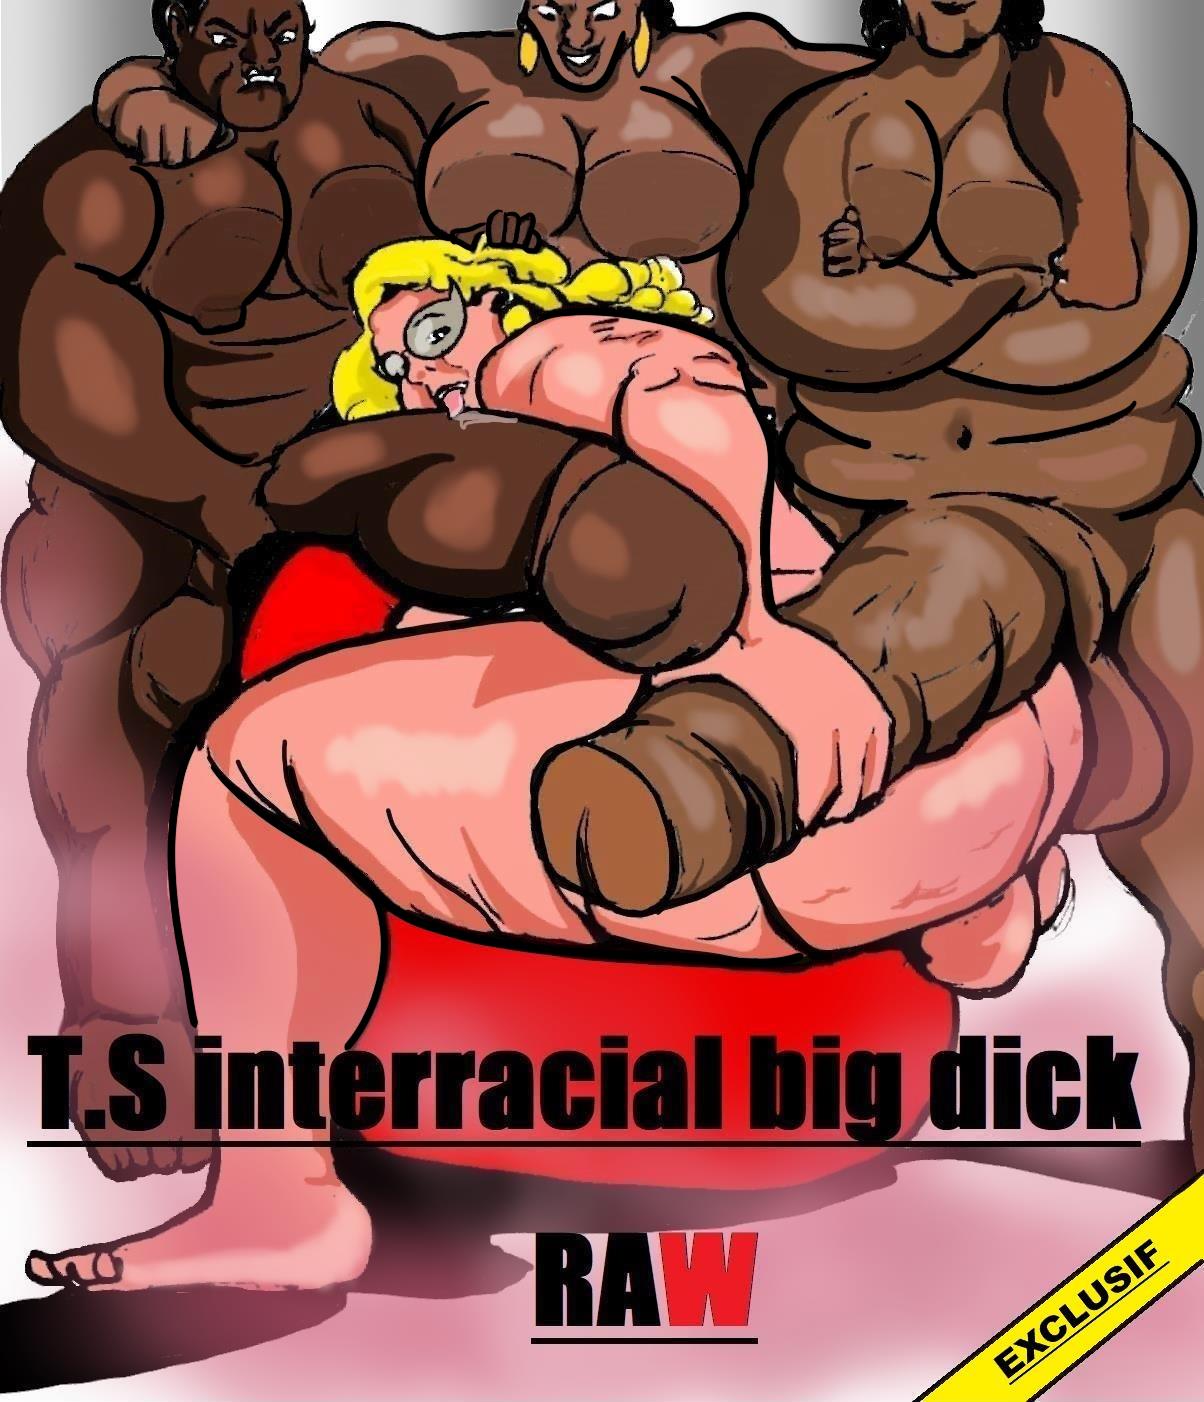 Huge Dicked Shemale Toon - Shemale Interracial Big Dick Raw- Carter Tyron - Porn Cartoon Comics